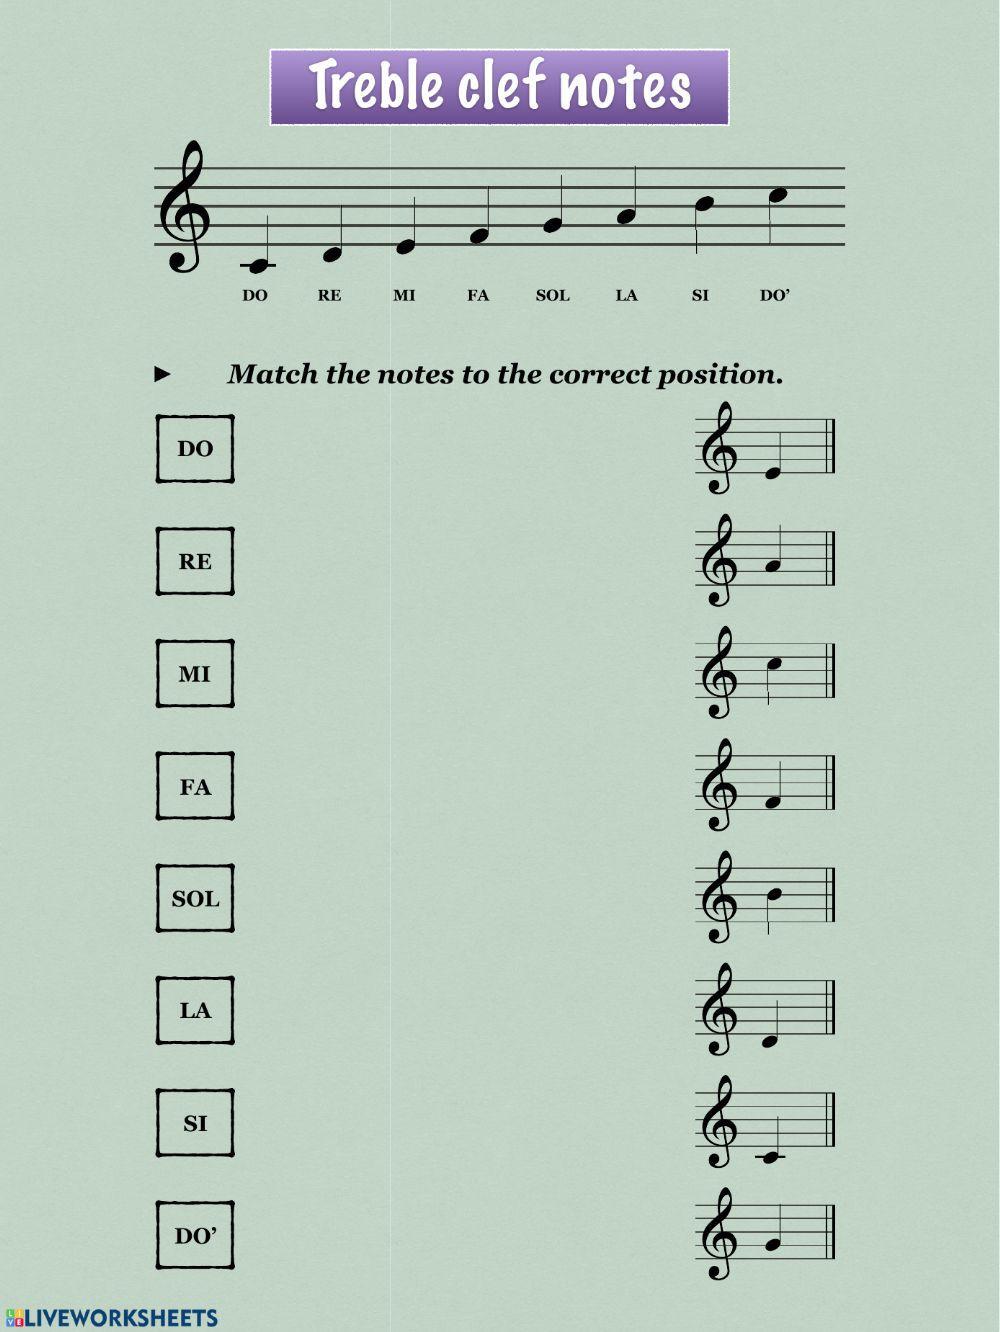 Treble clef notes